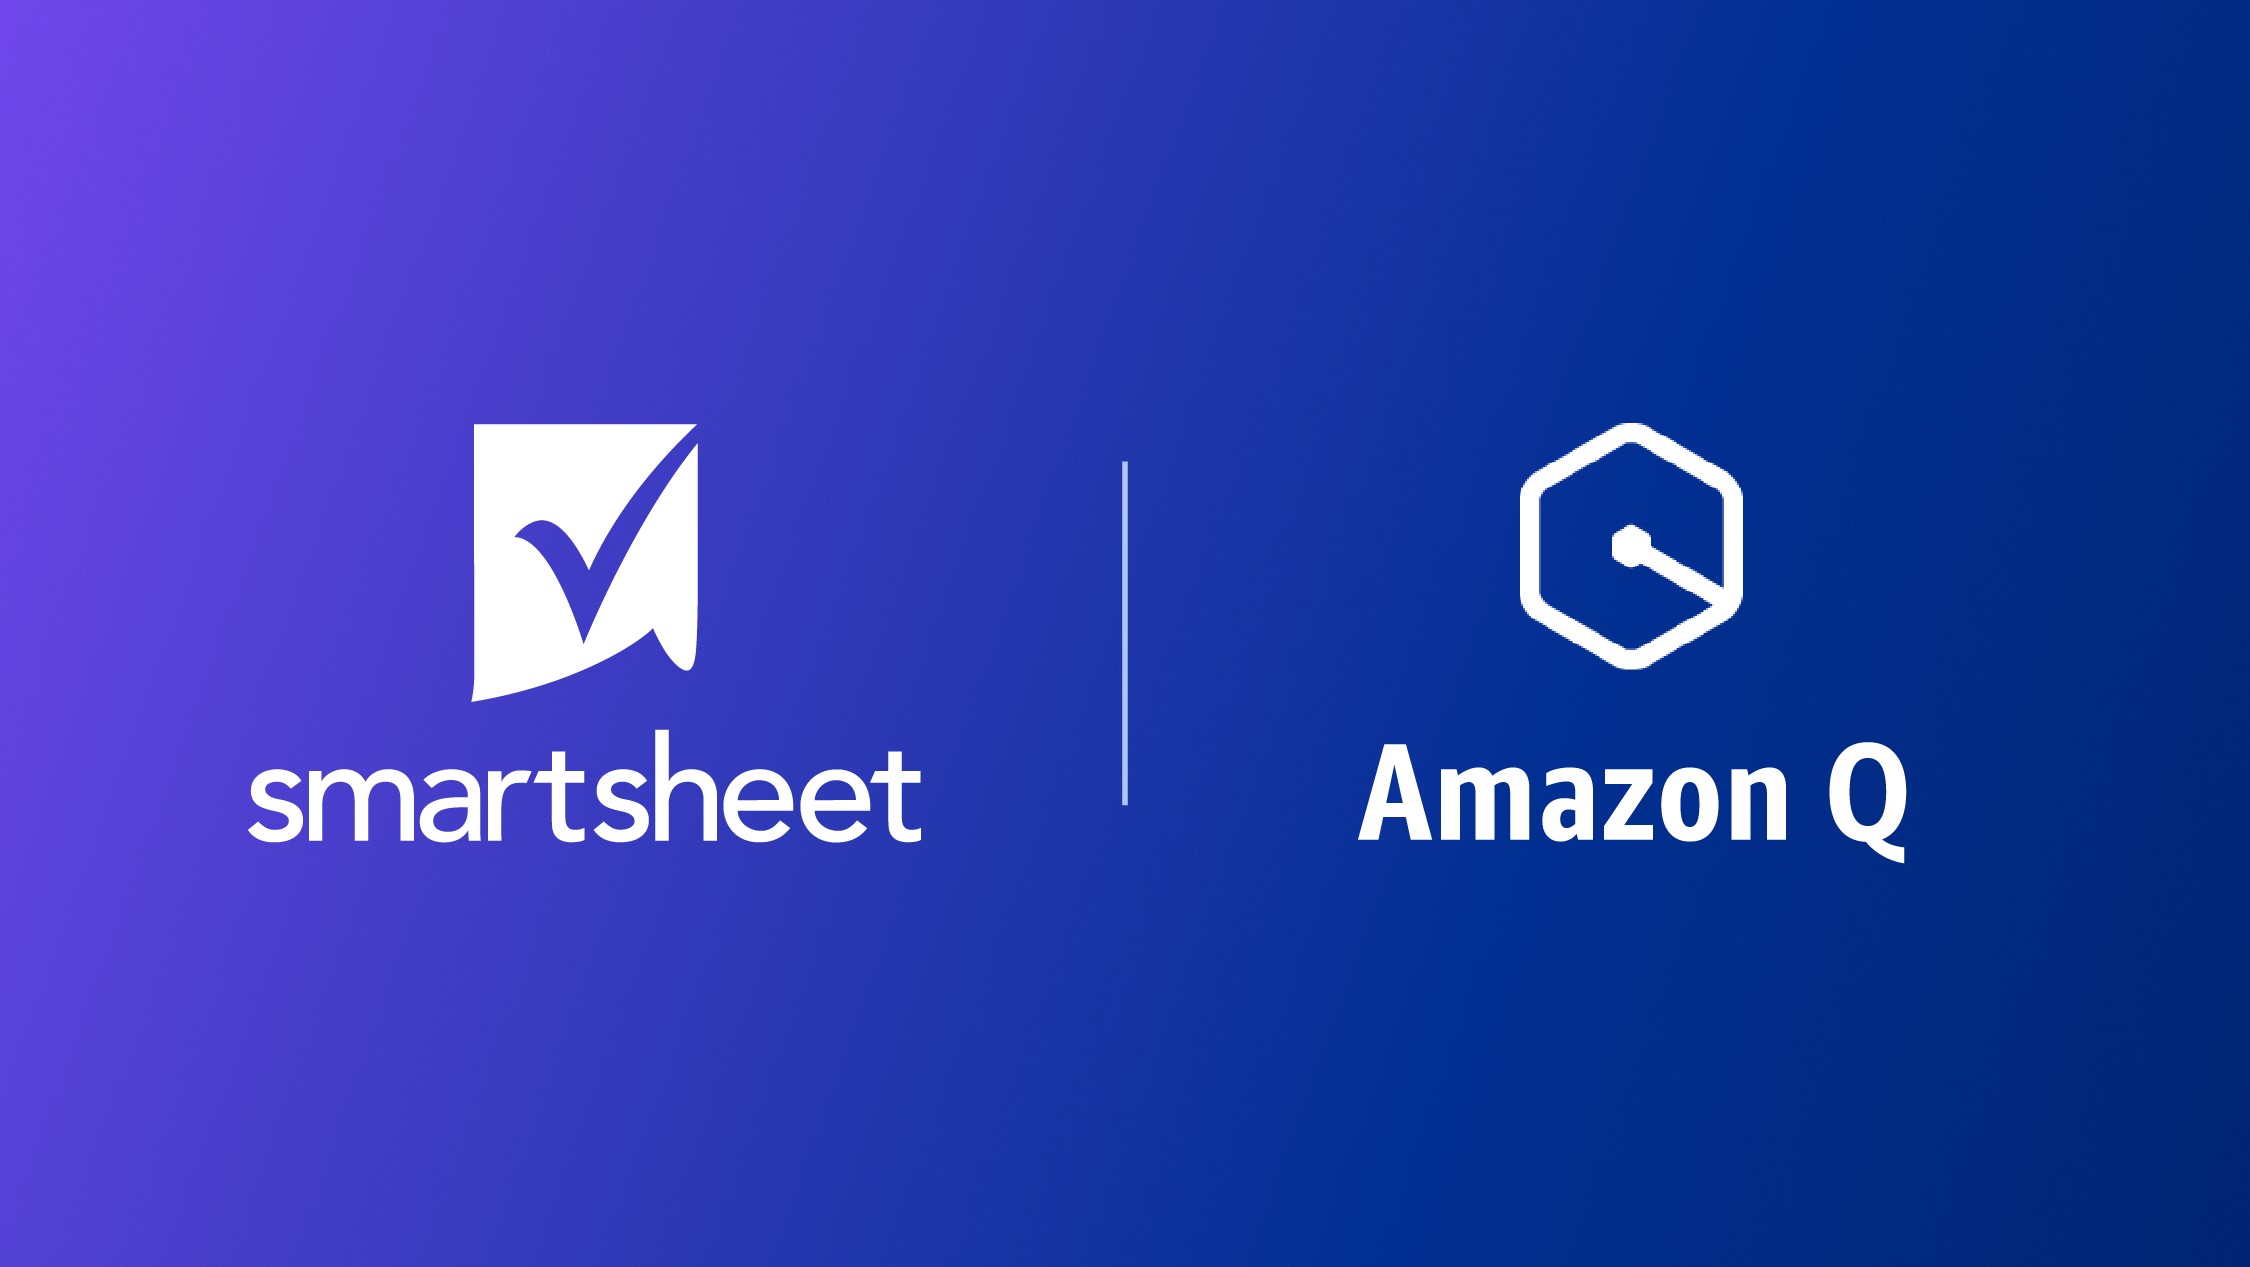 Smartsheet logo and Amazon Q logo on a purple background